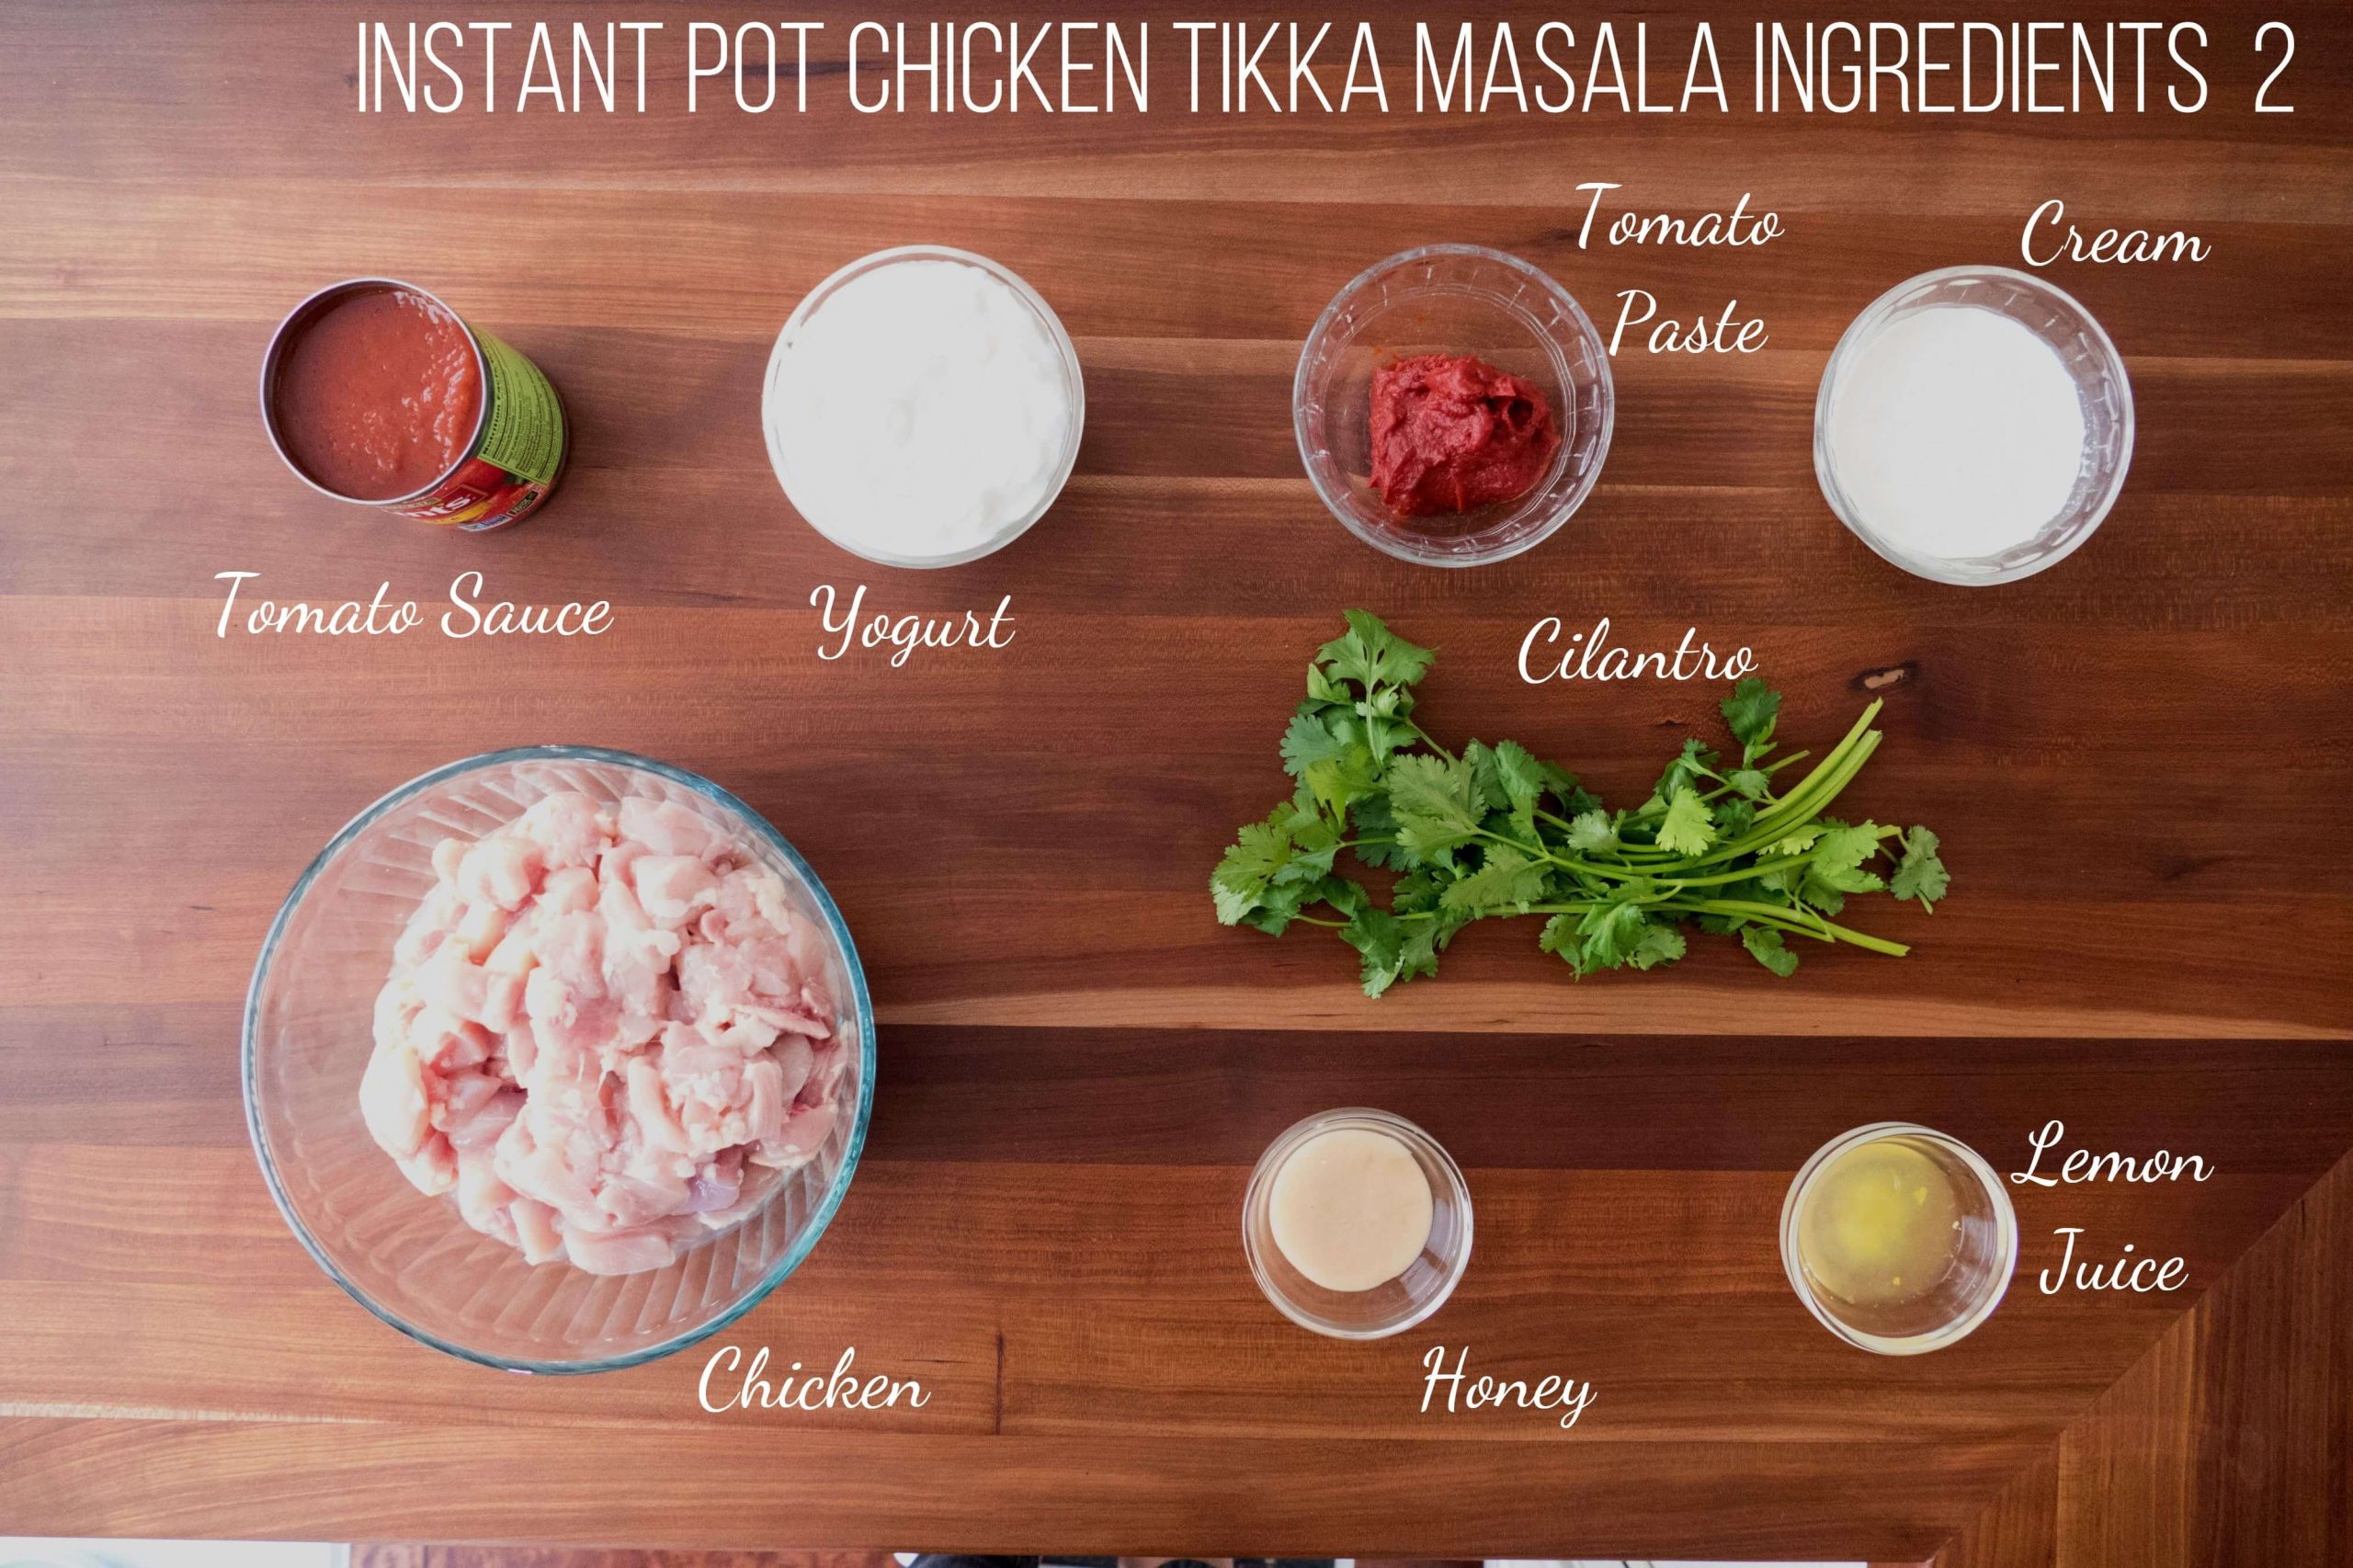 Instant Pot Chicken Tikka Masala Ingredients 2 - tomato sauce, yogurt, tomato paste, cream, chicken, honey, lemon juice, cilantro - Paint the Kitchen Red